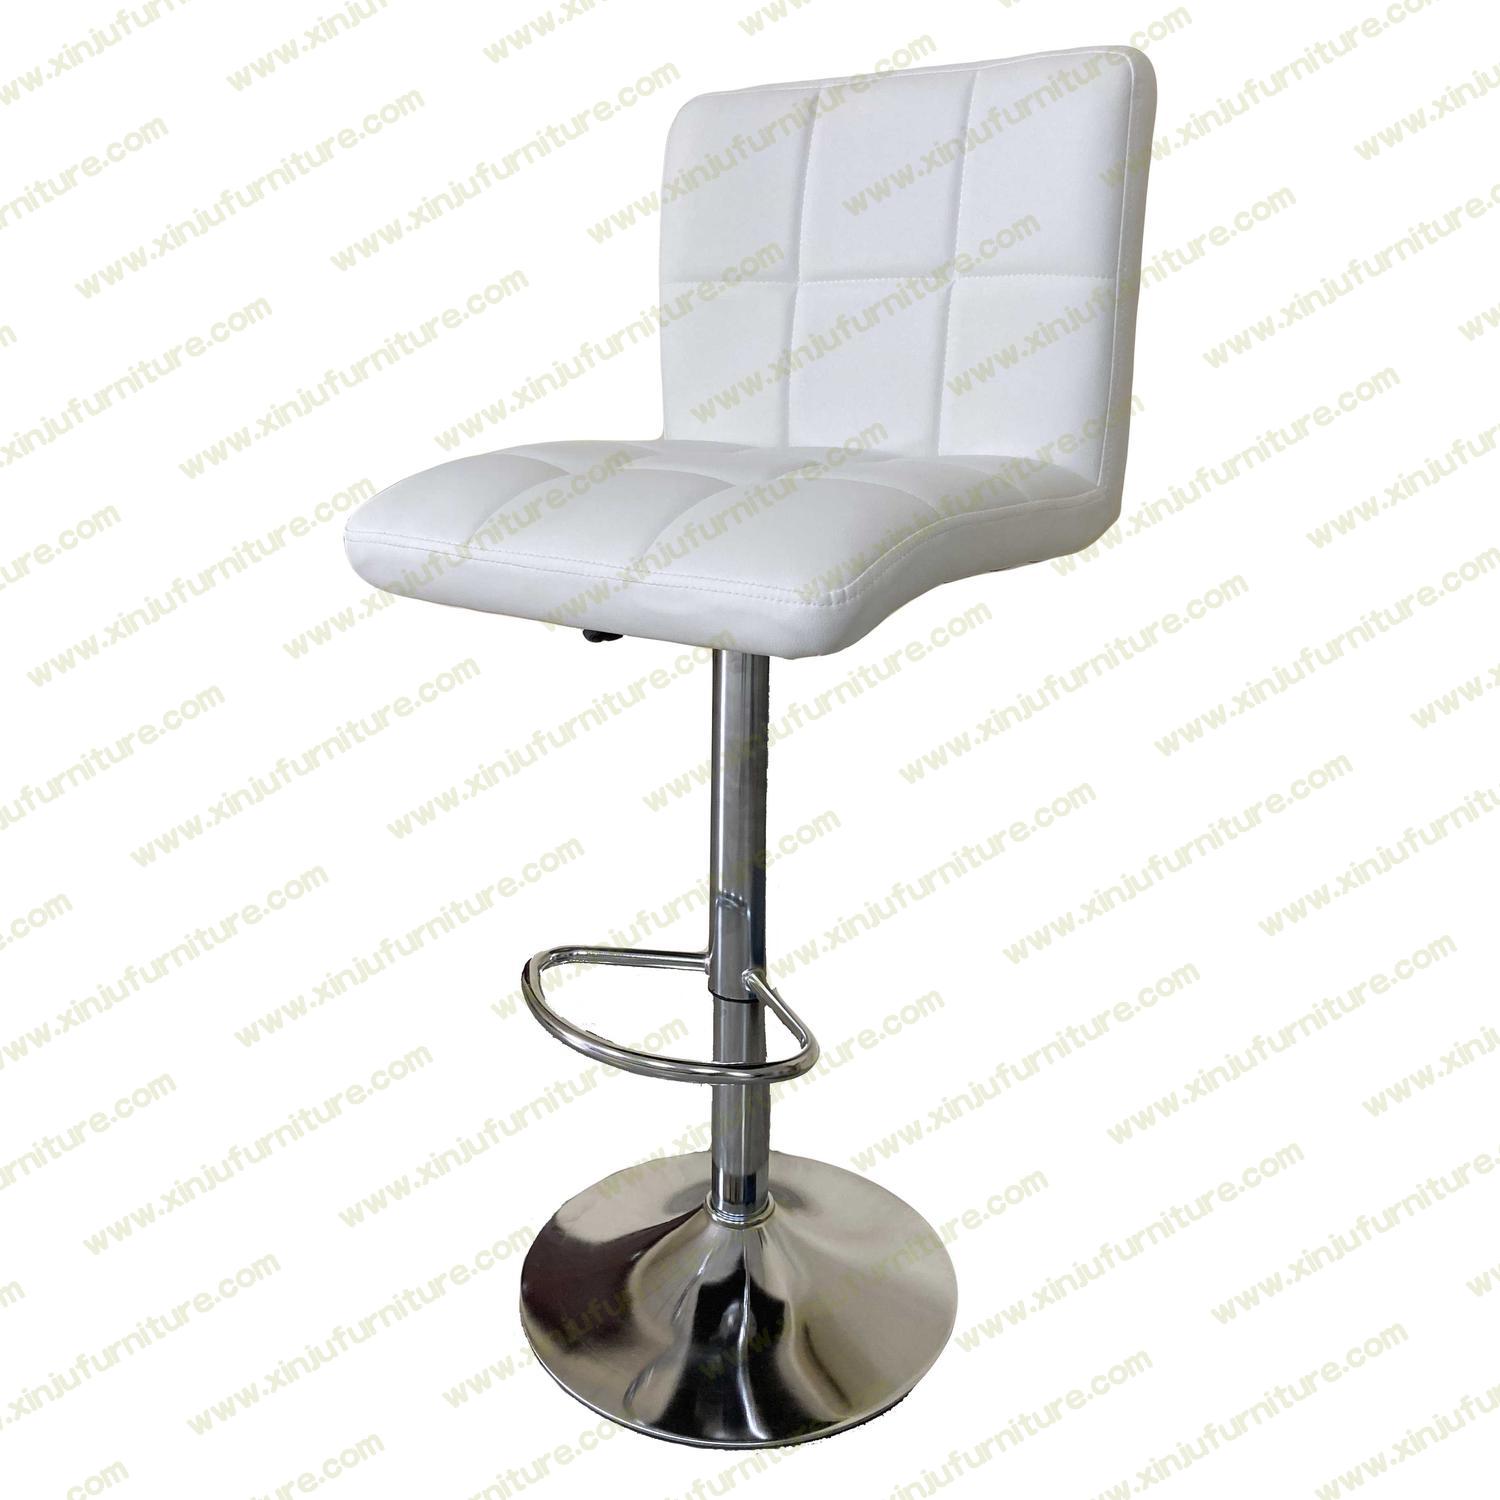 White leather bar chair